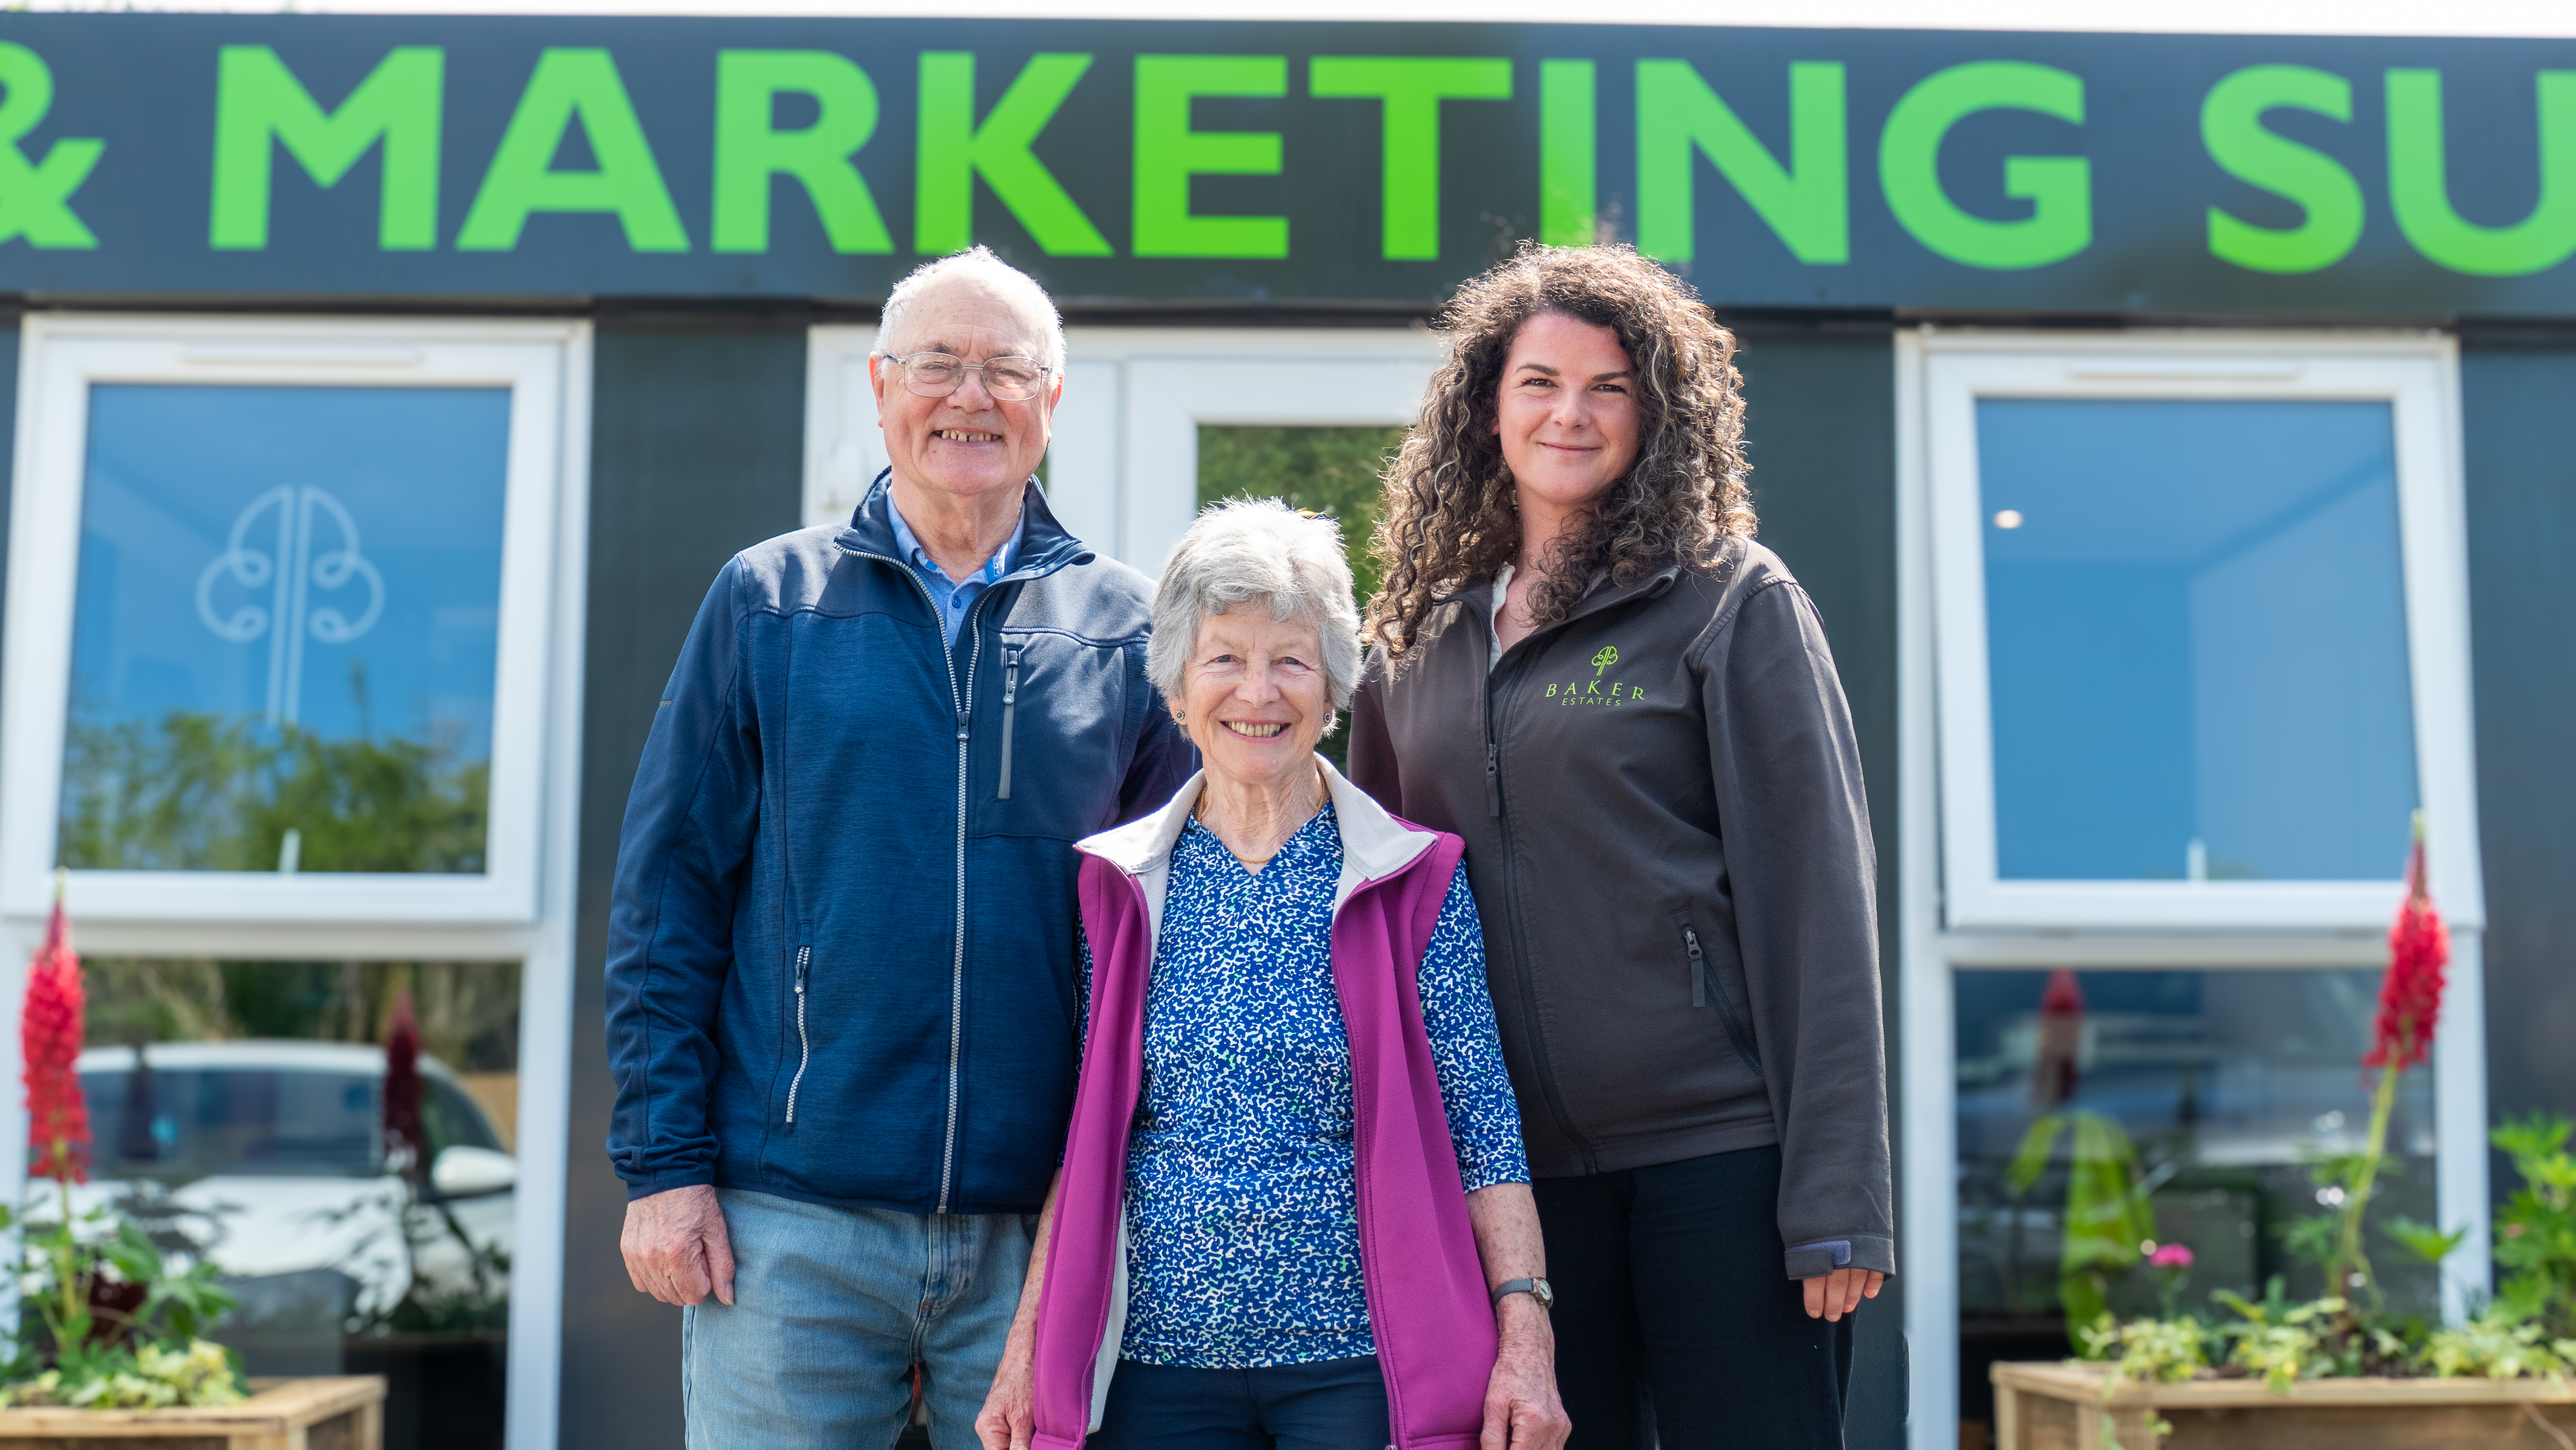 Baker Estates opens Sales & Marketing Suite at its new Little Orchard development in Tavistock